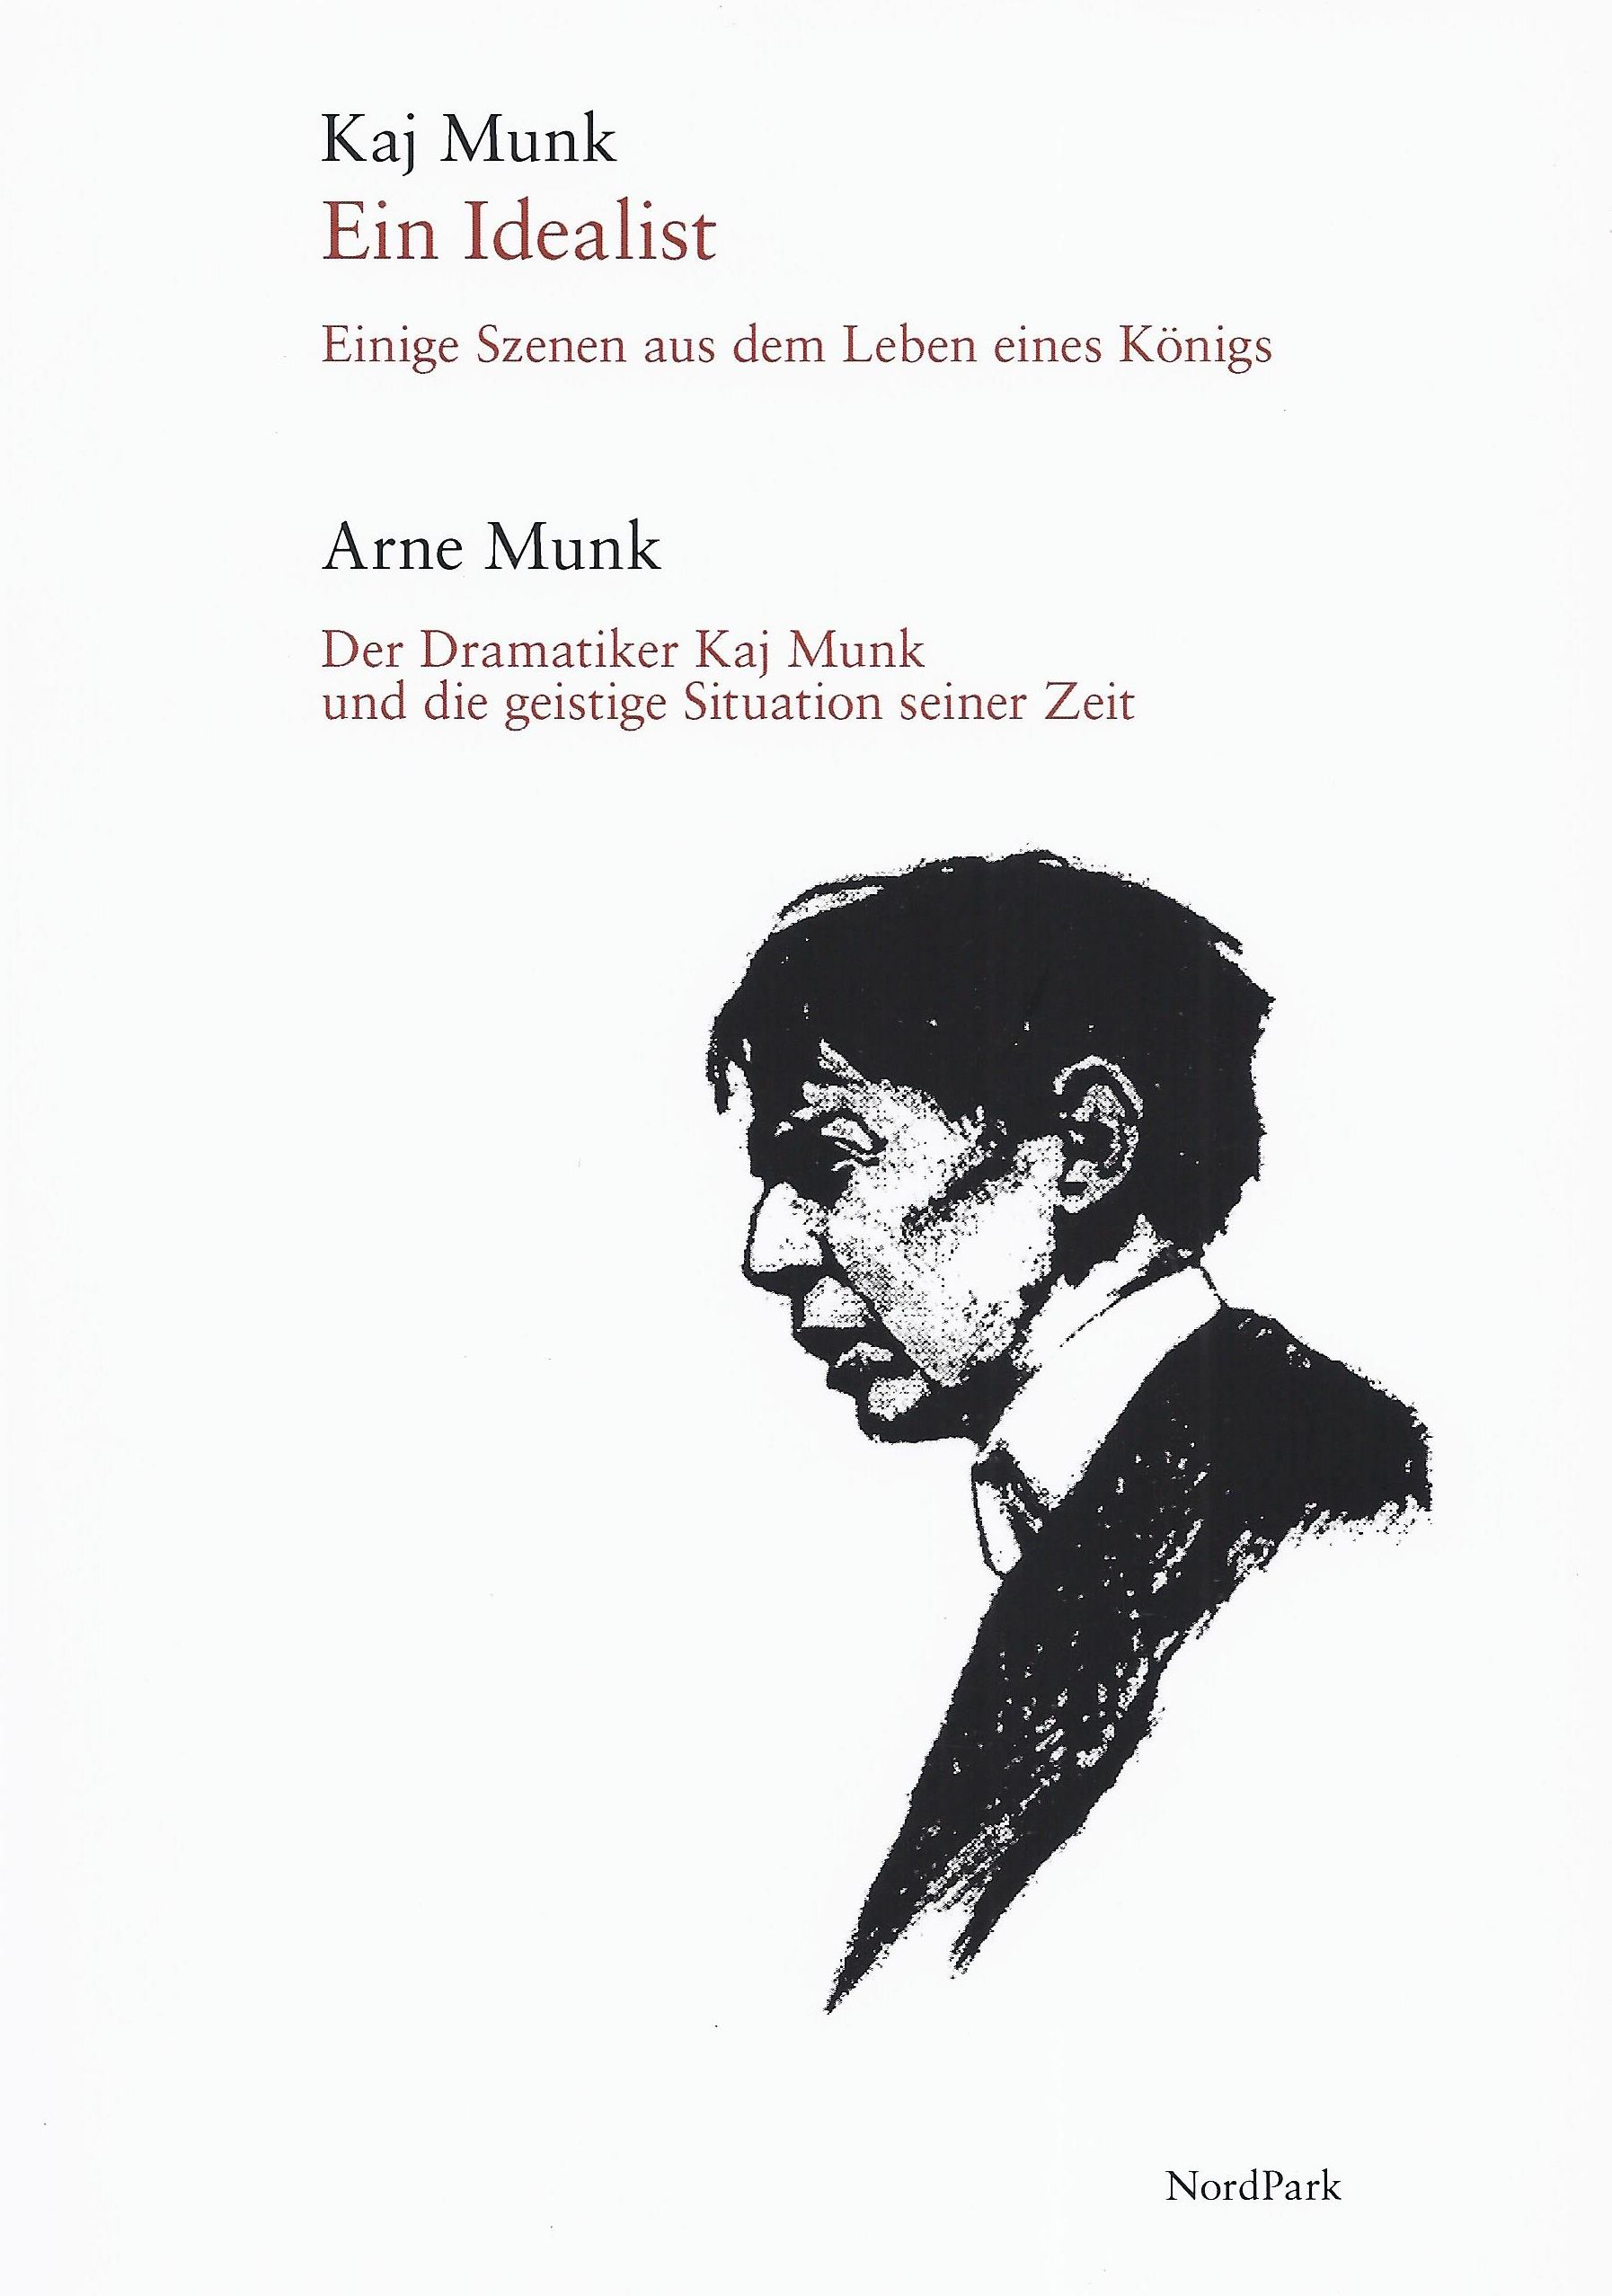 munk-idelaist-cover.jpg